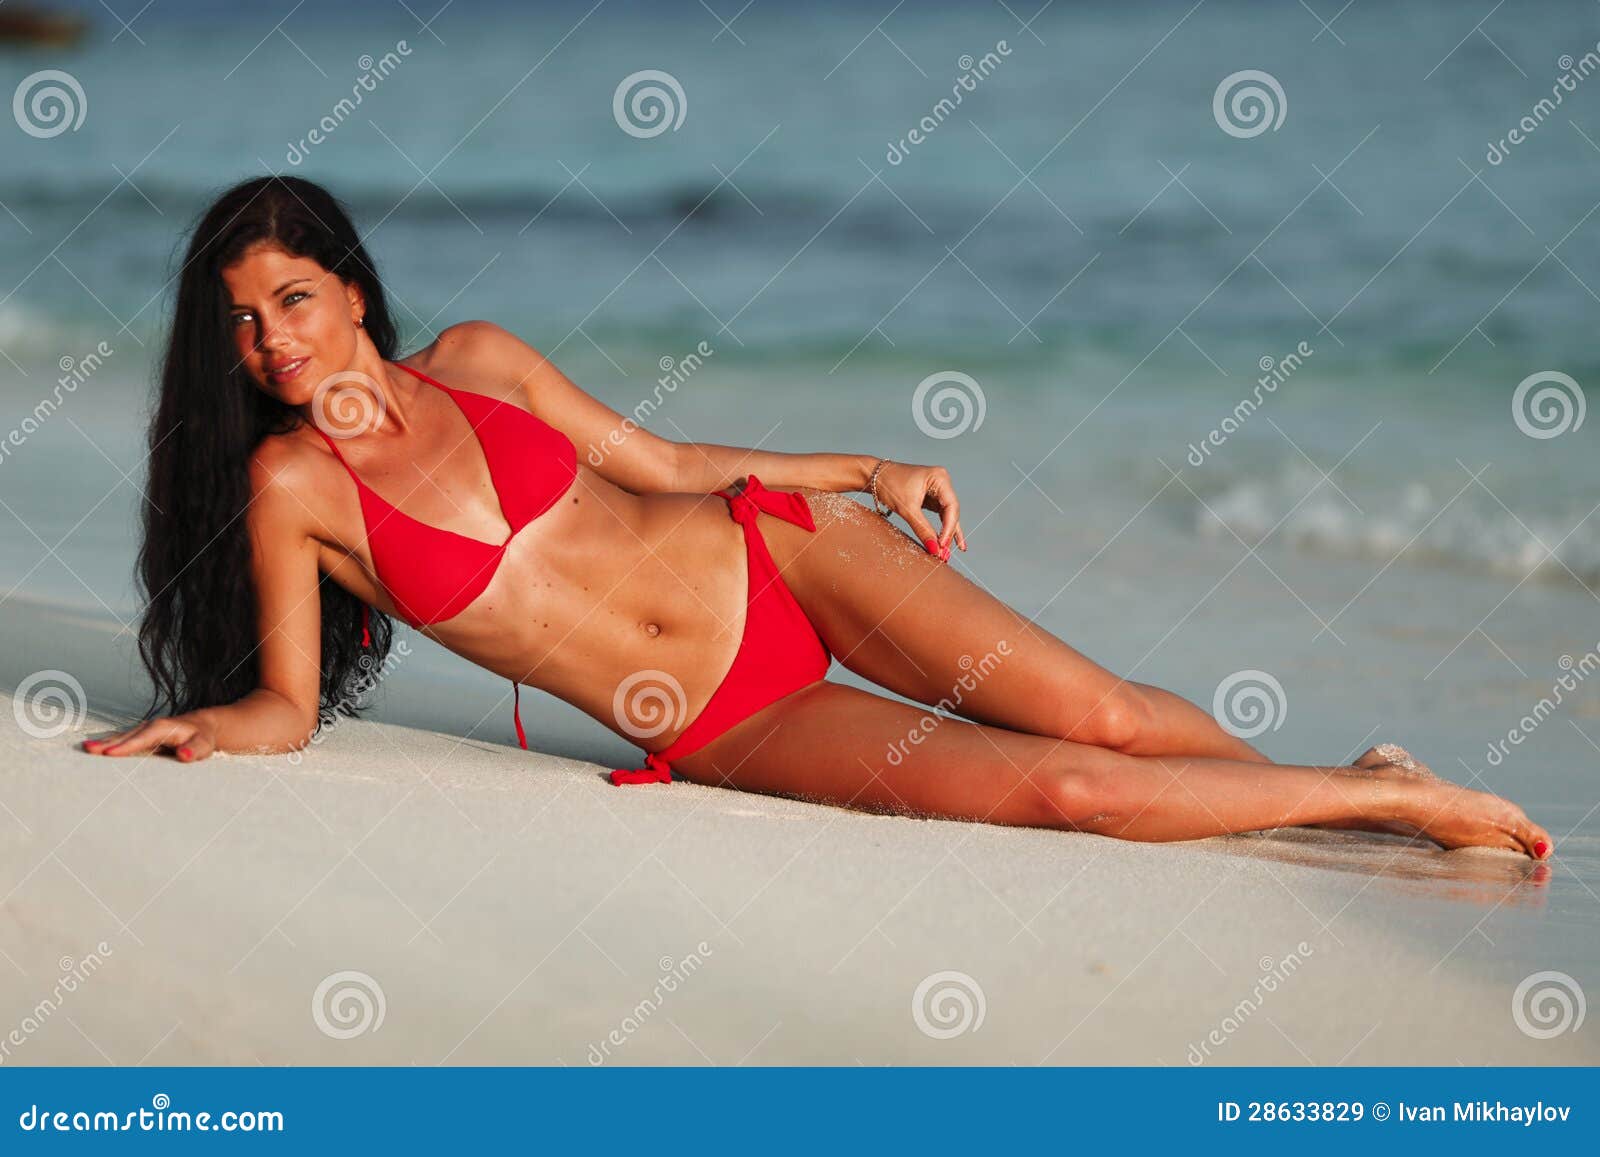 Beautiful woman on beach stock image pic